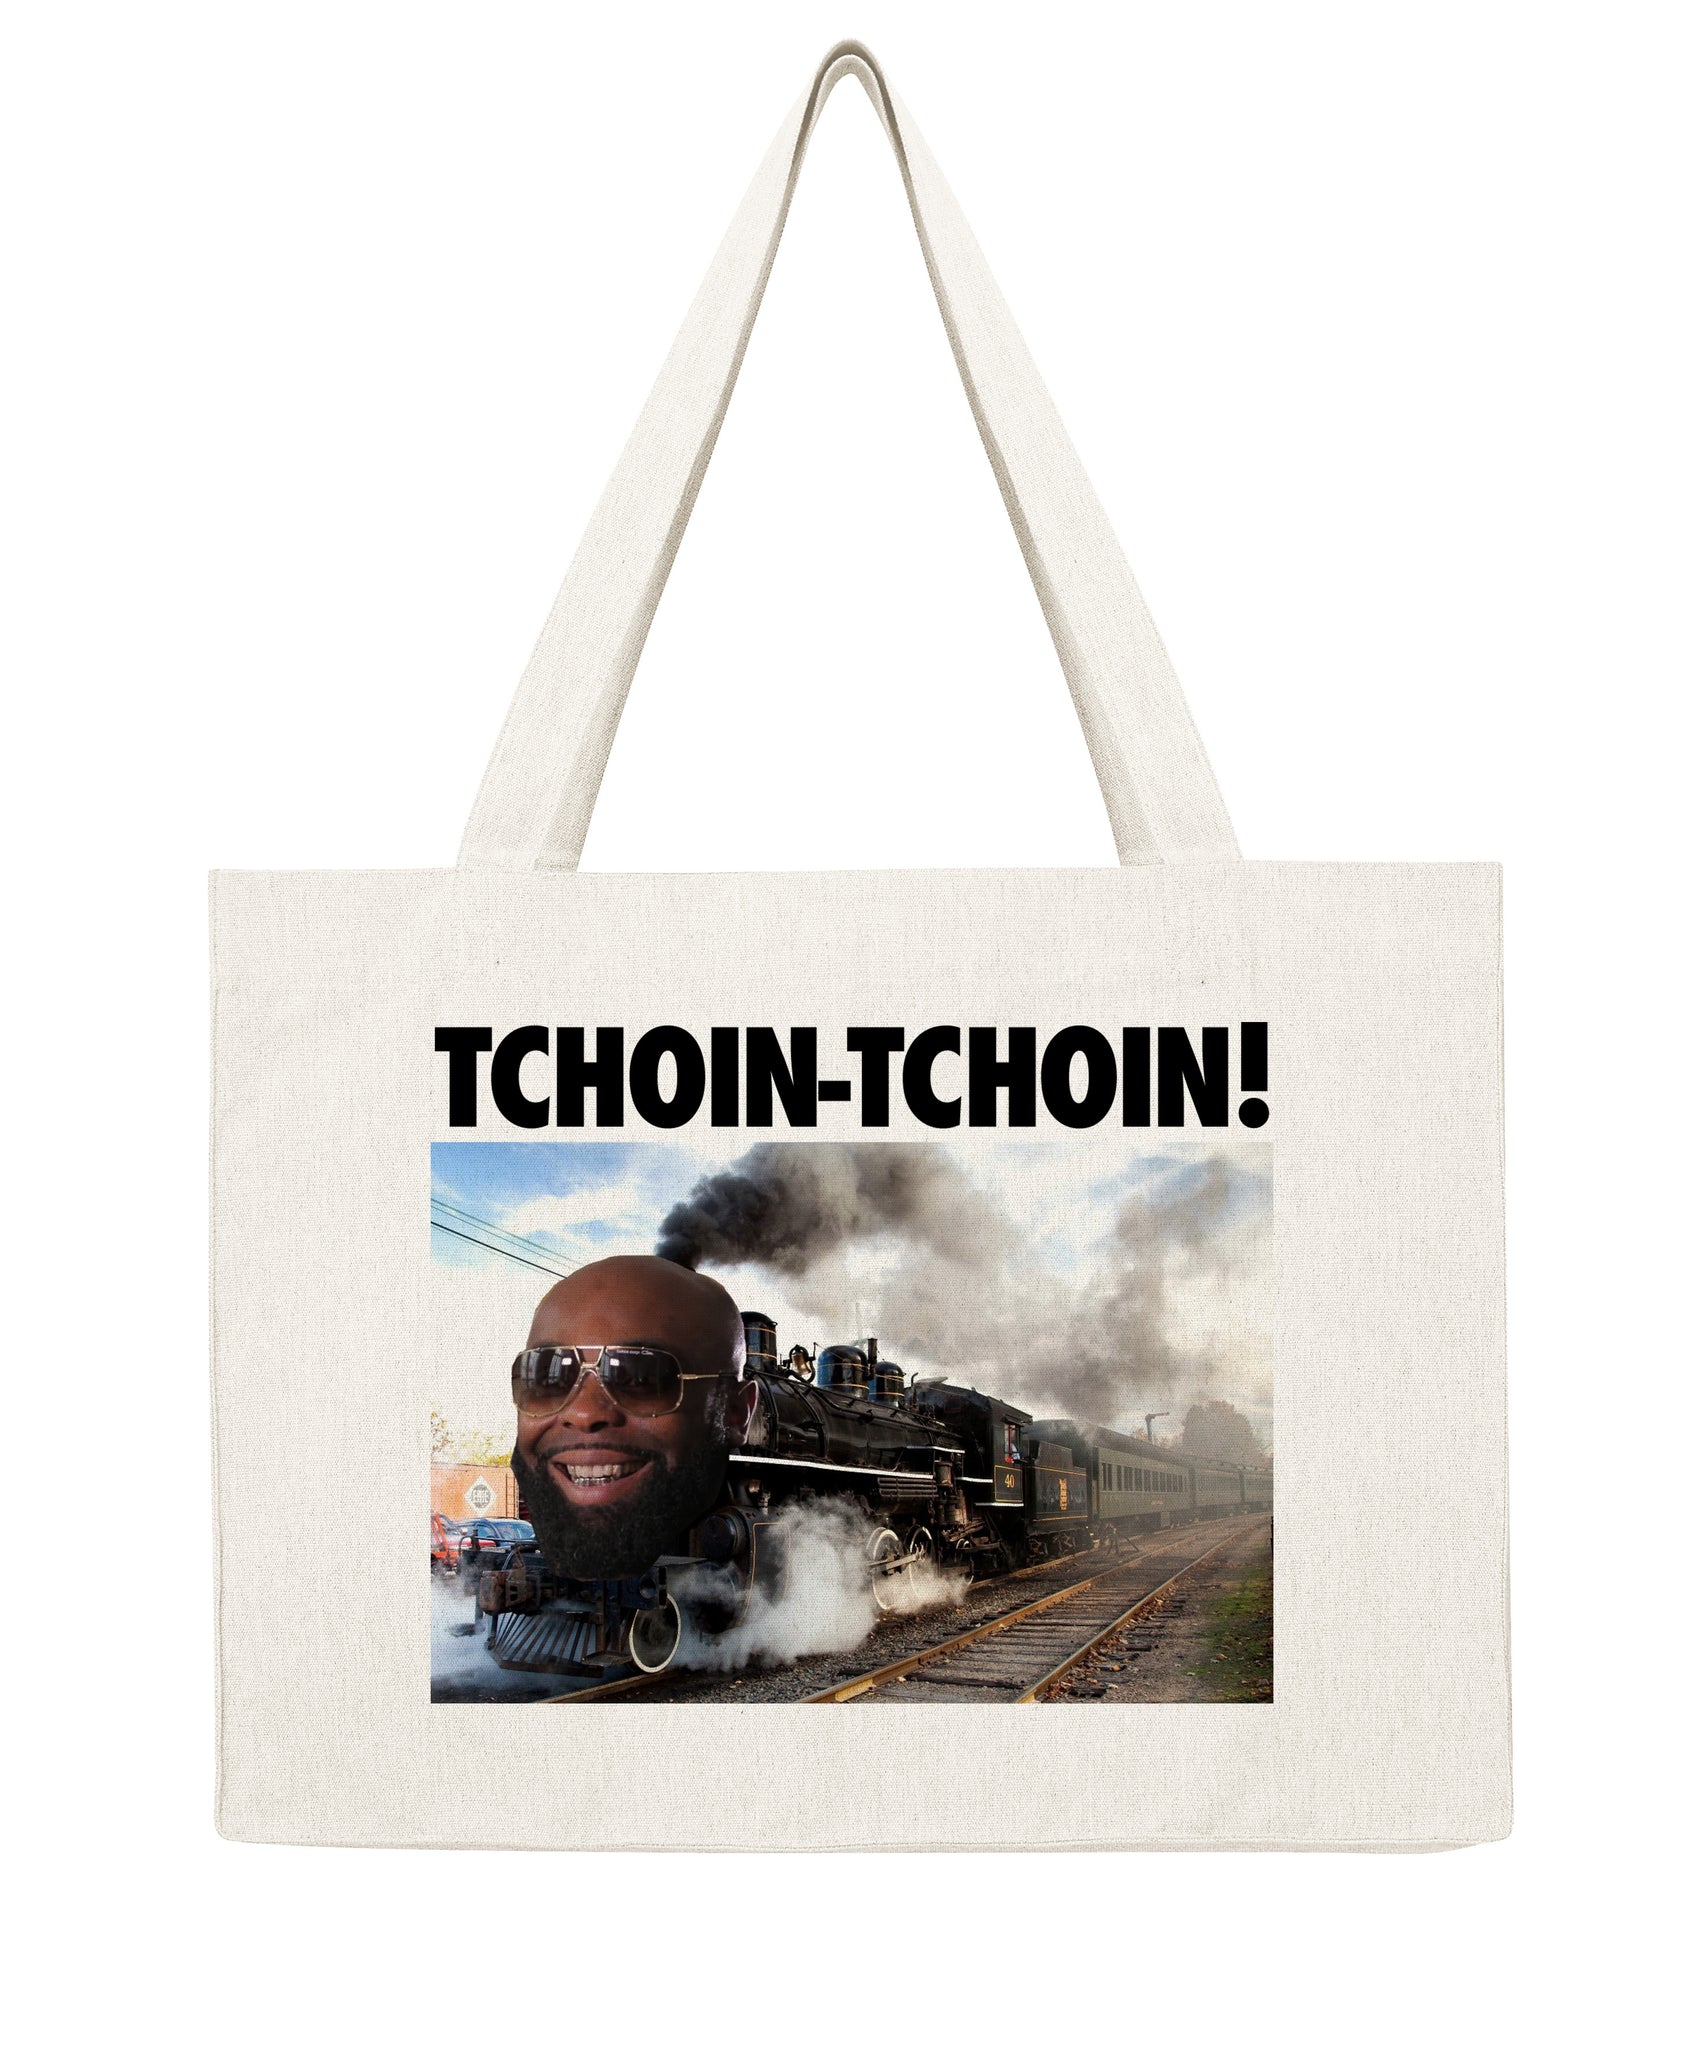 Tchoin tchoin - Shopping bag-Sacs-Atelier Amelot